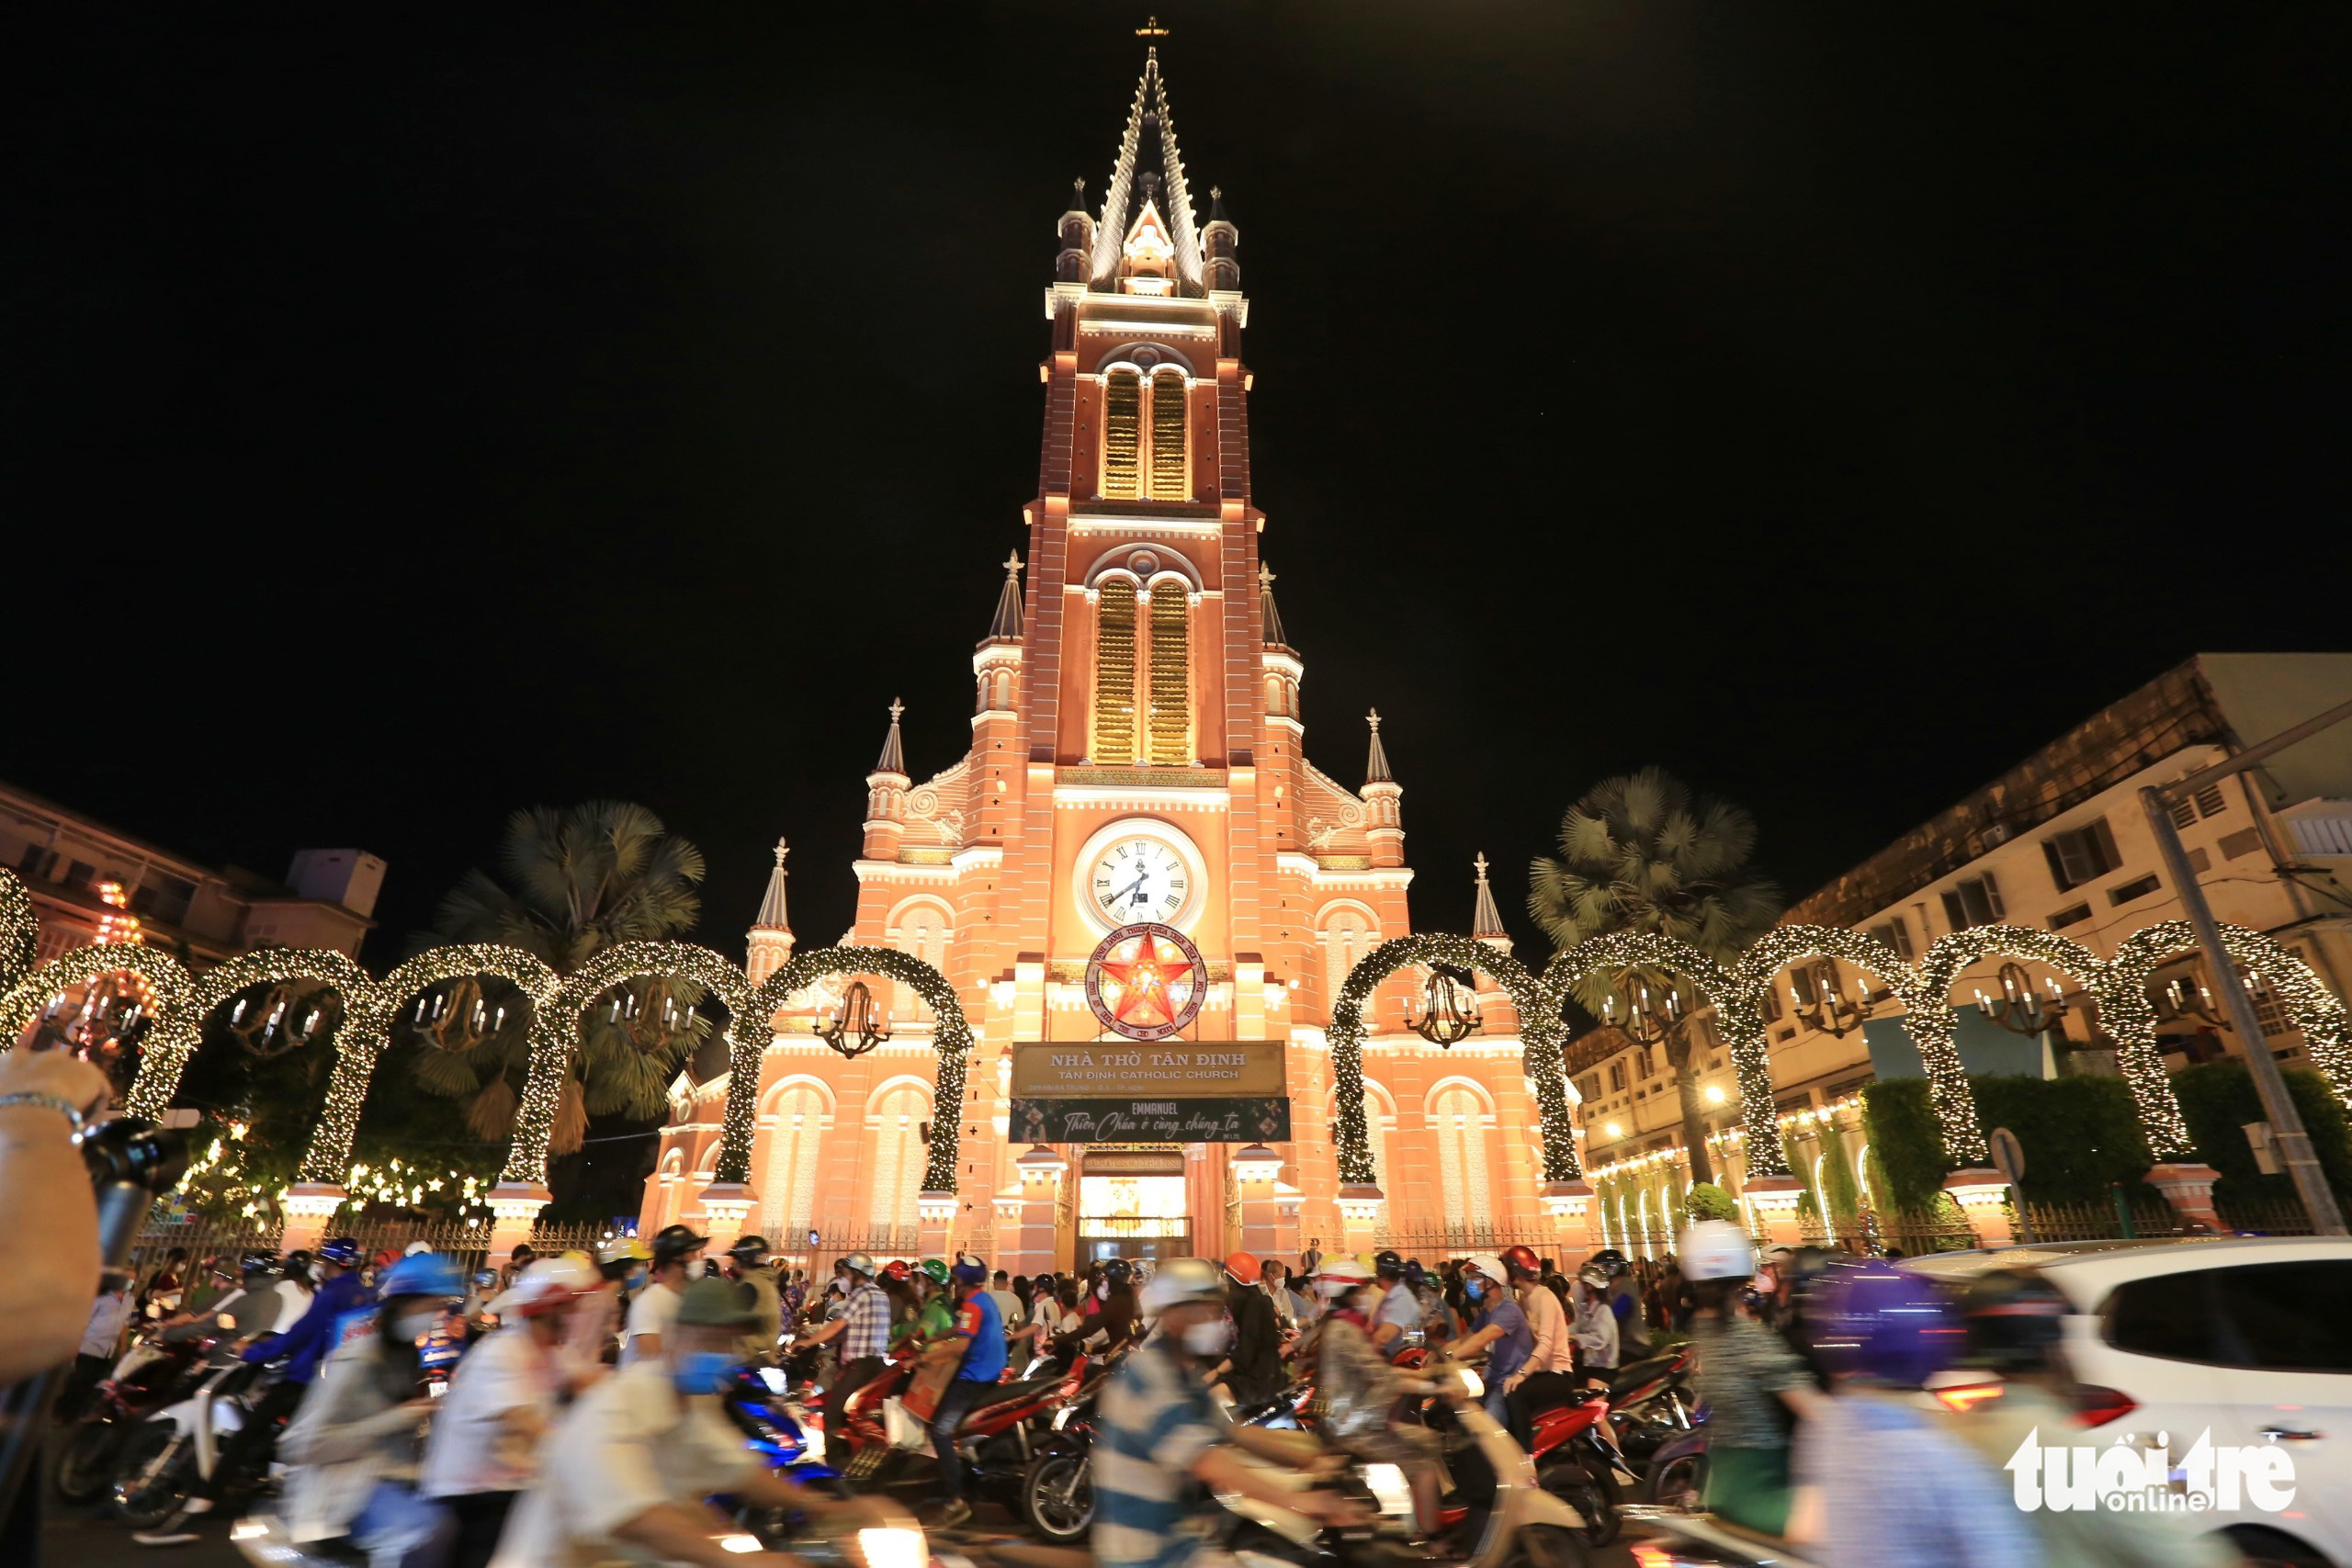 In pictures: Christmas celebrations in stark contrast across Vietnam